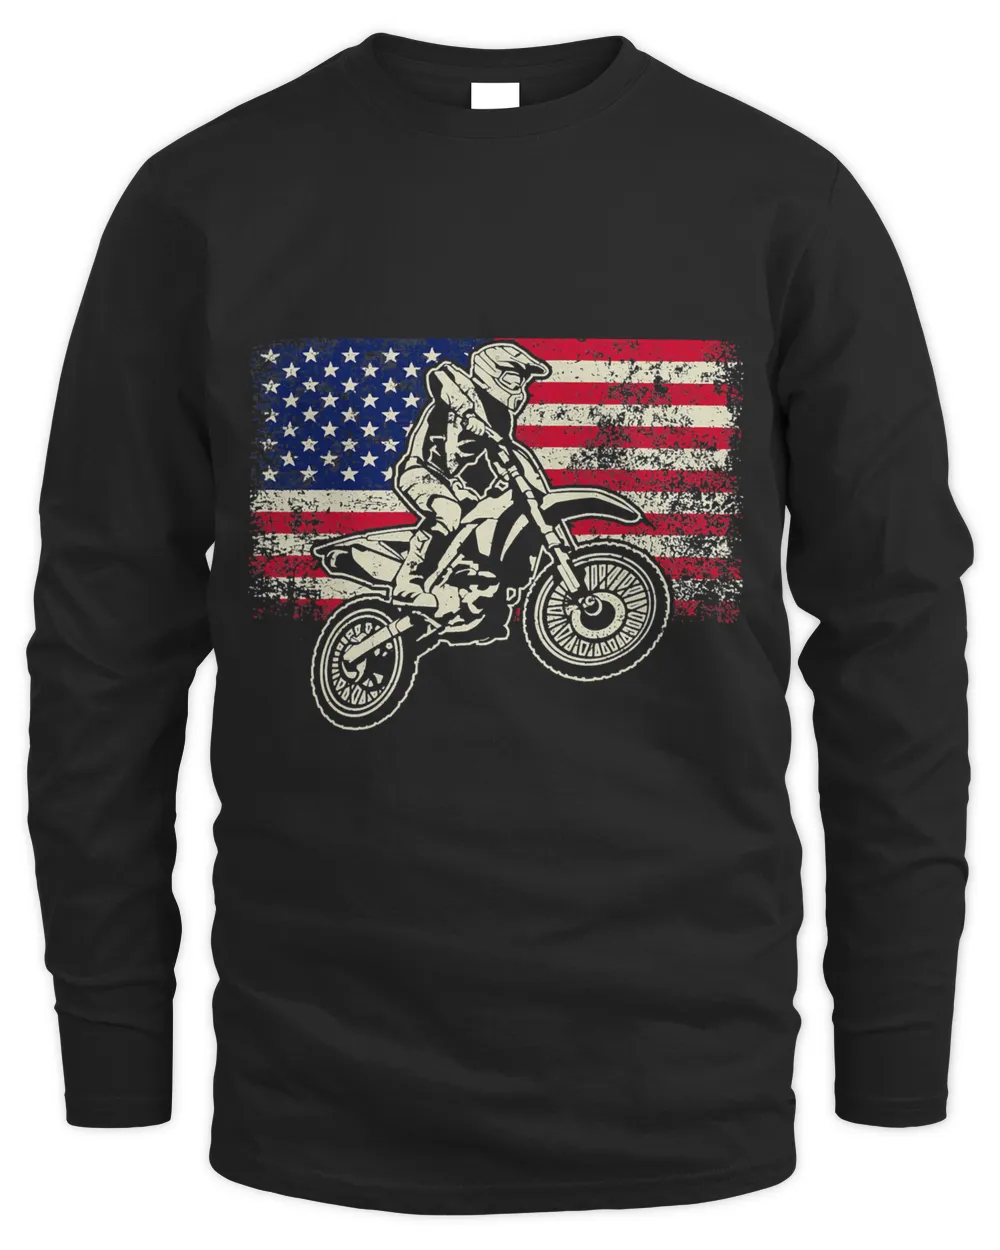 American Flag Motorcross TShirt Cool Dirt Bike Men Women Boy